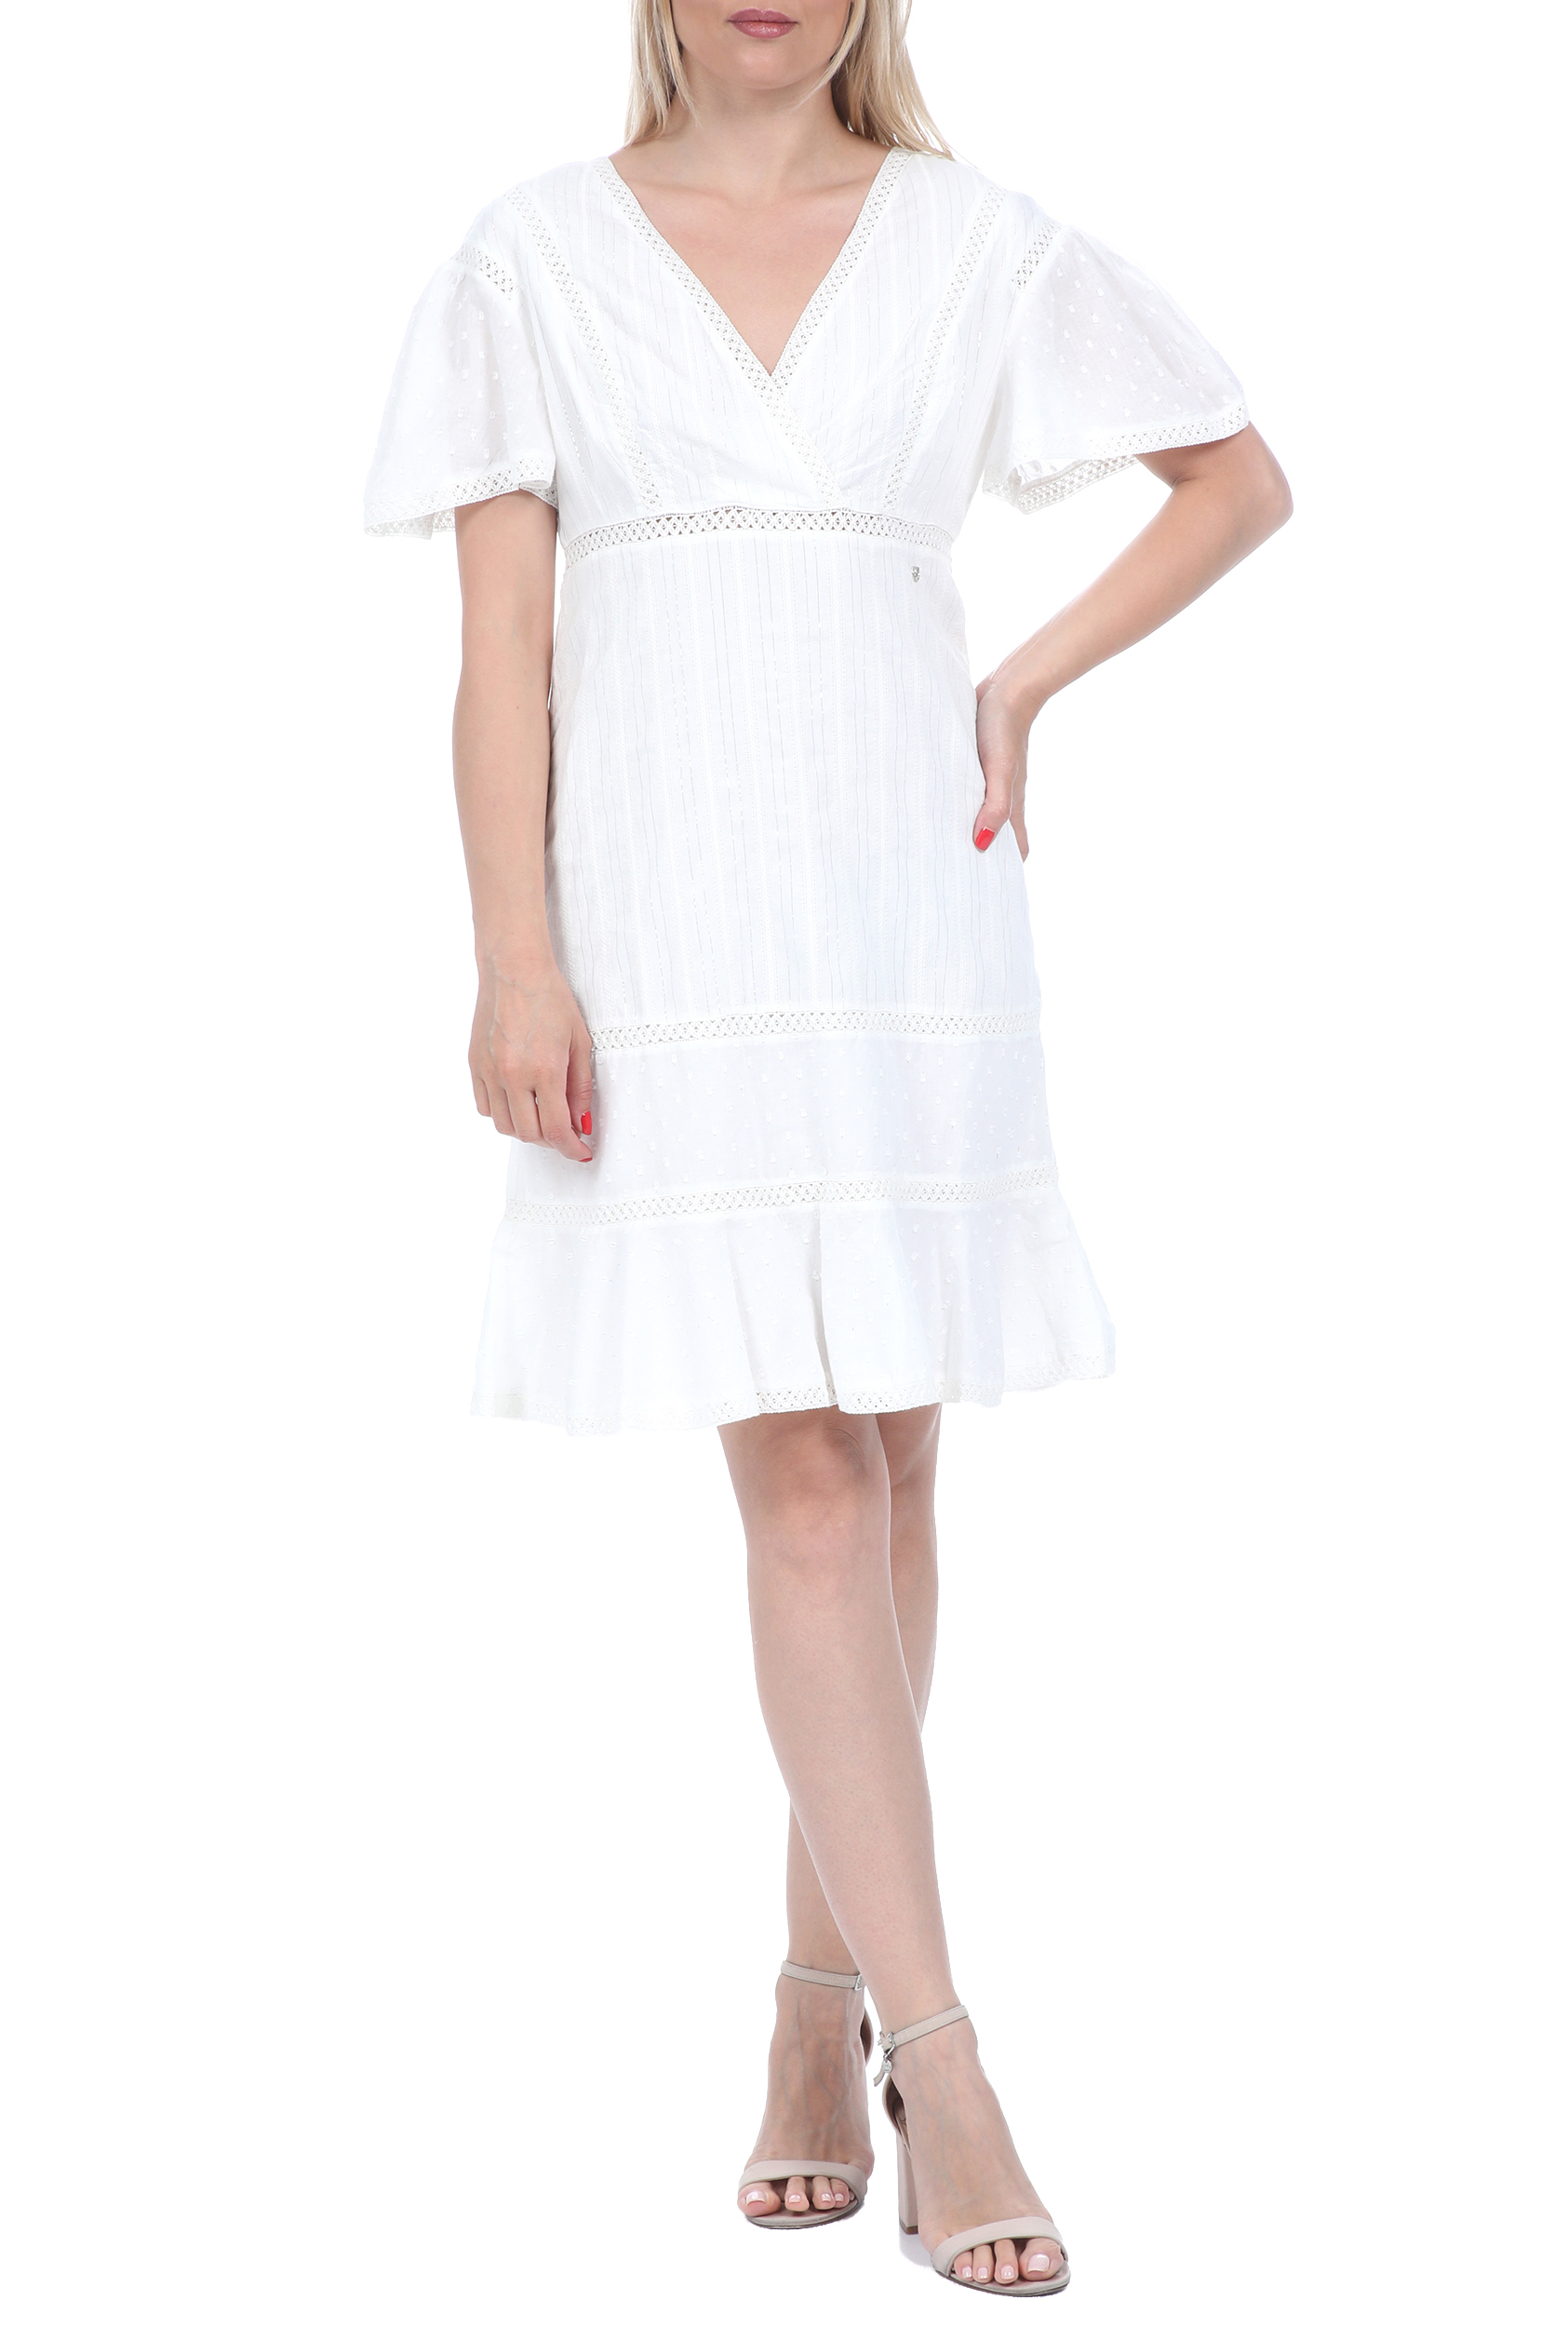 GAUDI – Γυναικειο mini φορεμα GAUDI λευκο ασημι